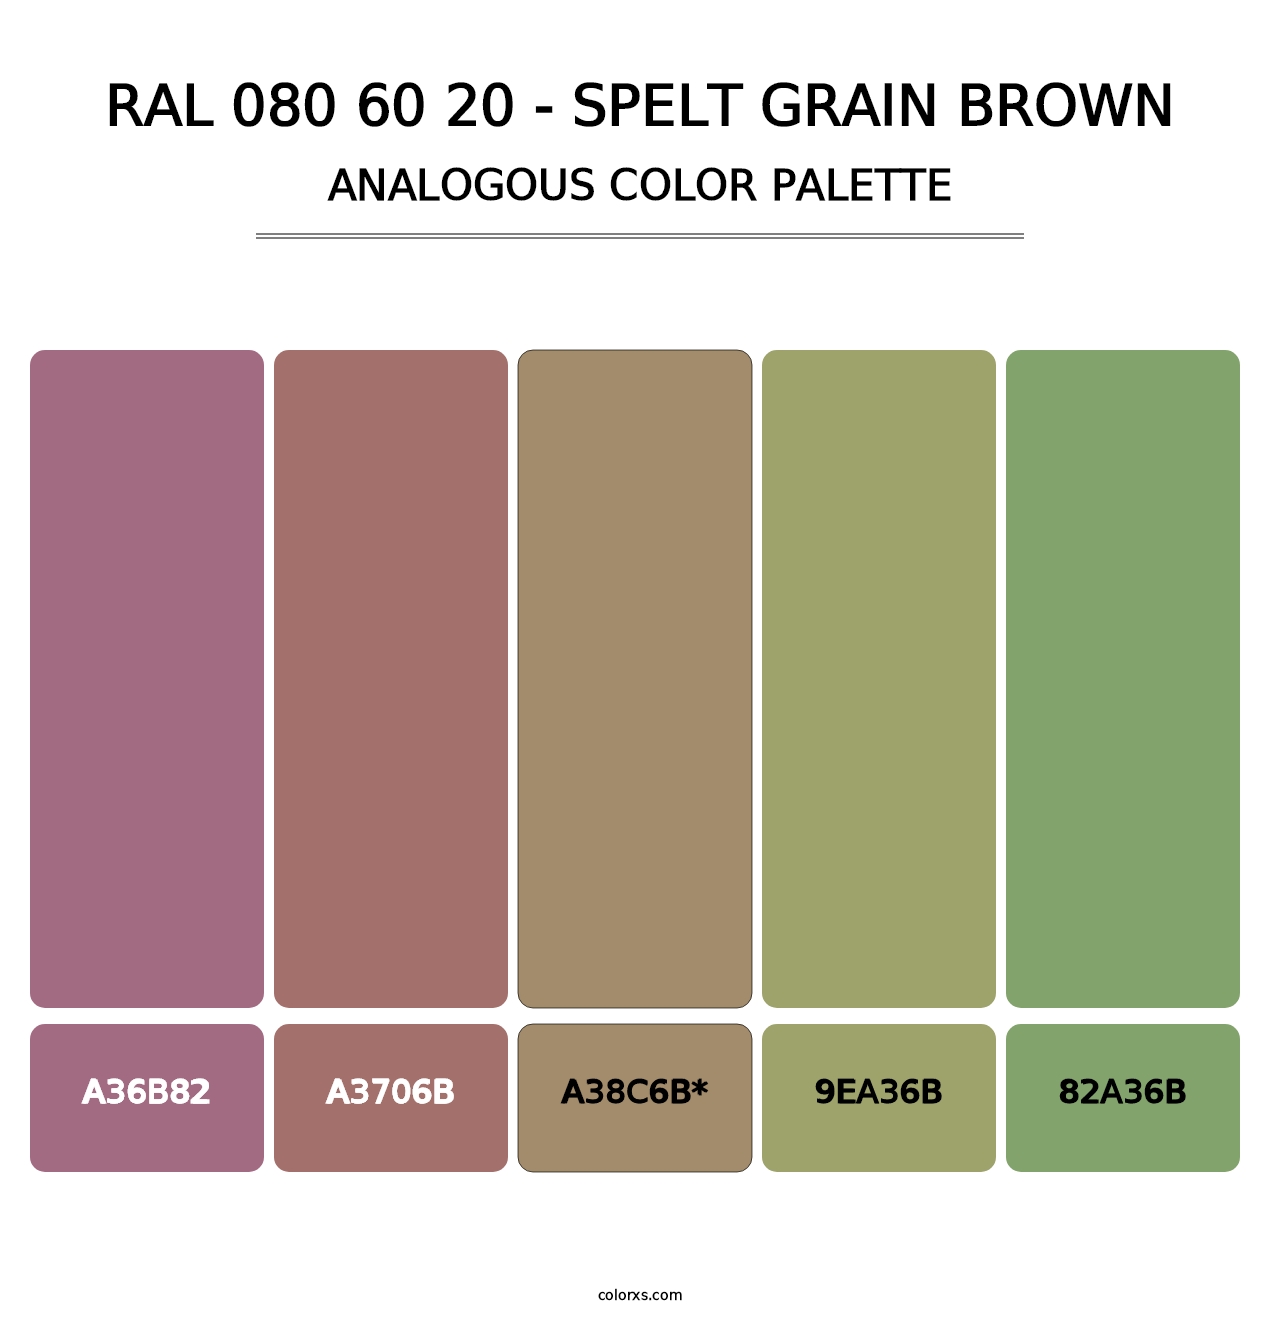 RAL 080 60 20 - Spelt Grain Brown - Analogous Color Palette